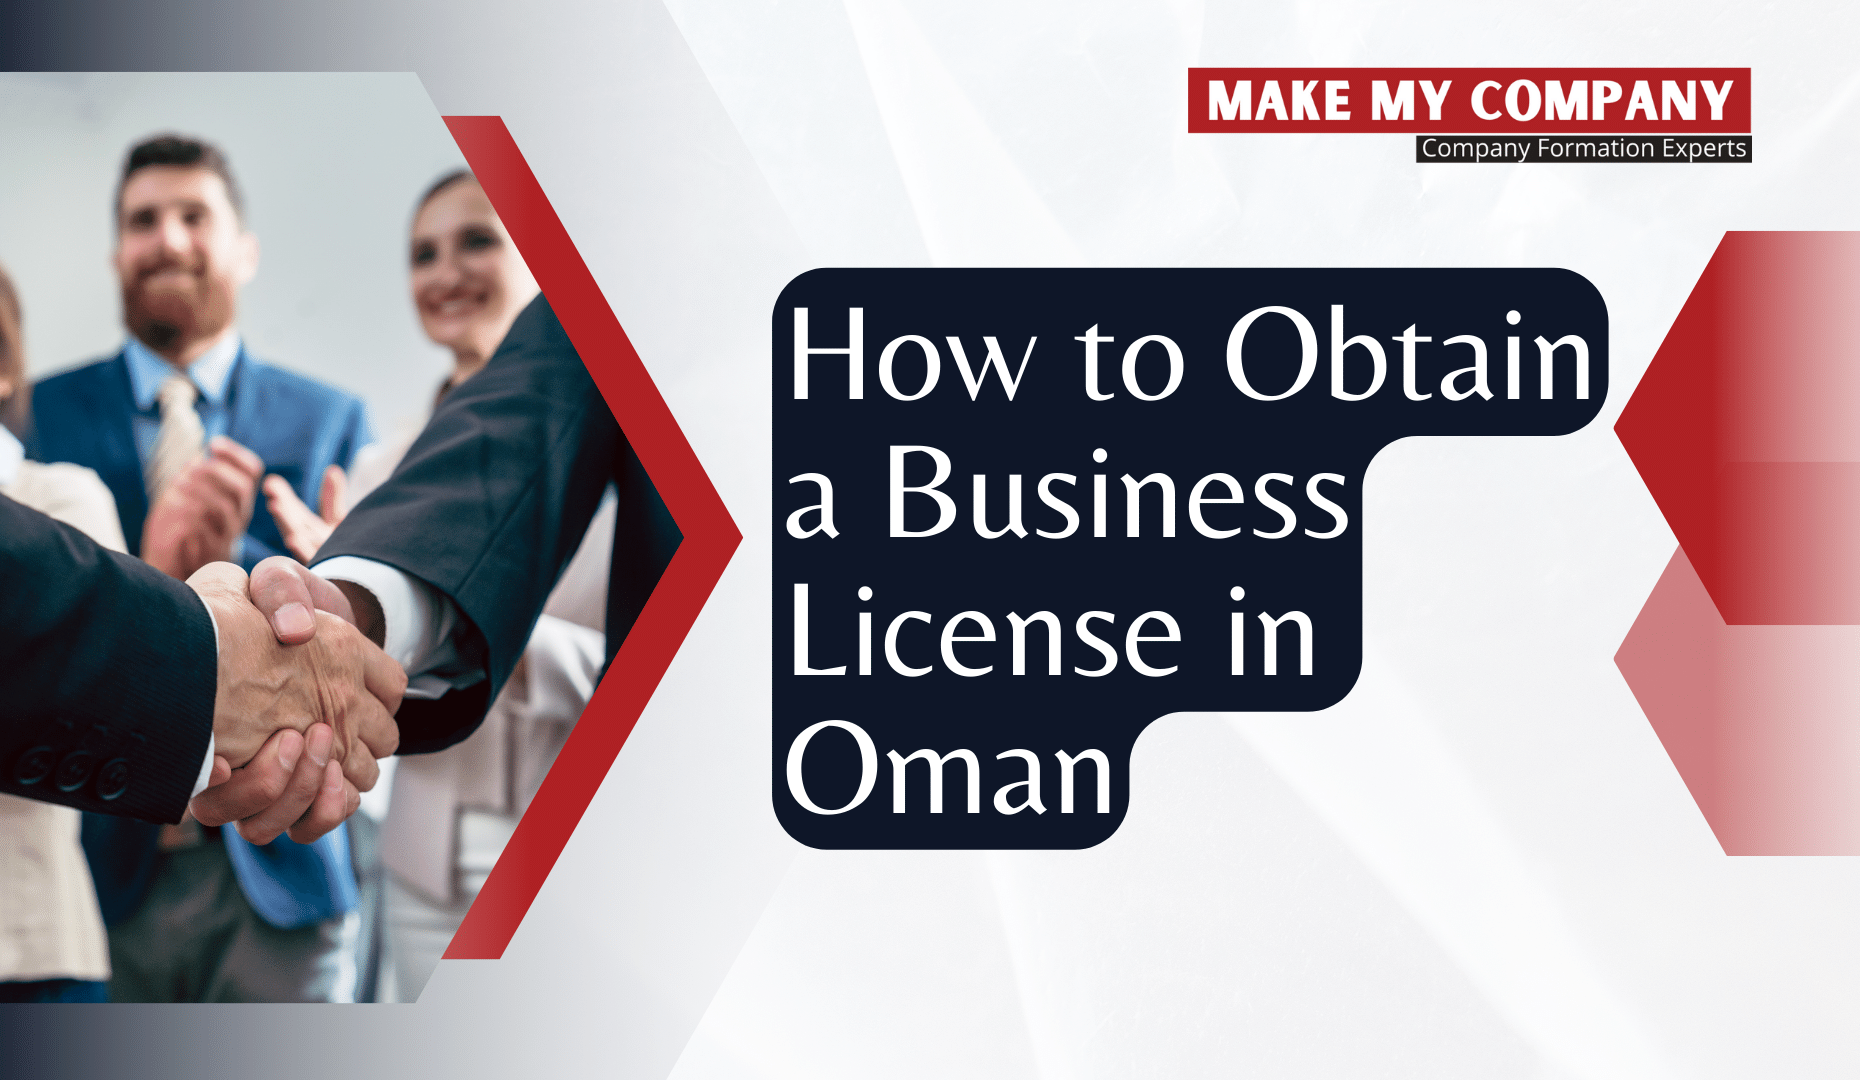 Obtain a Business License in Oman